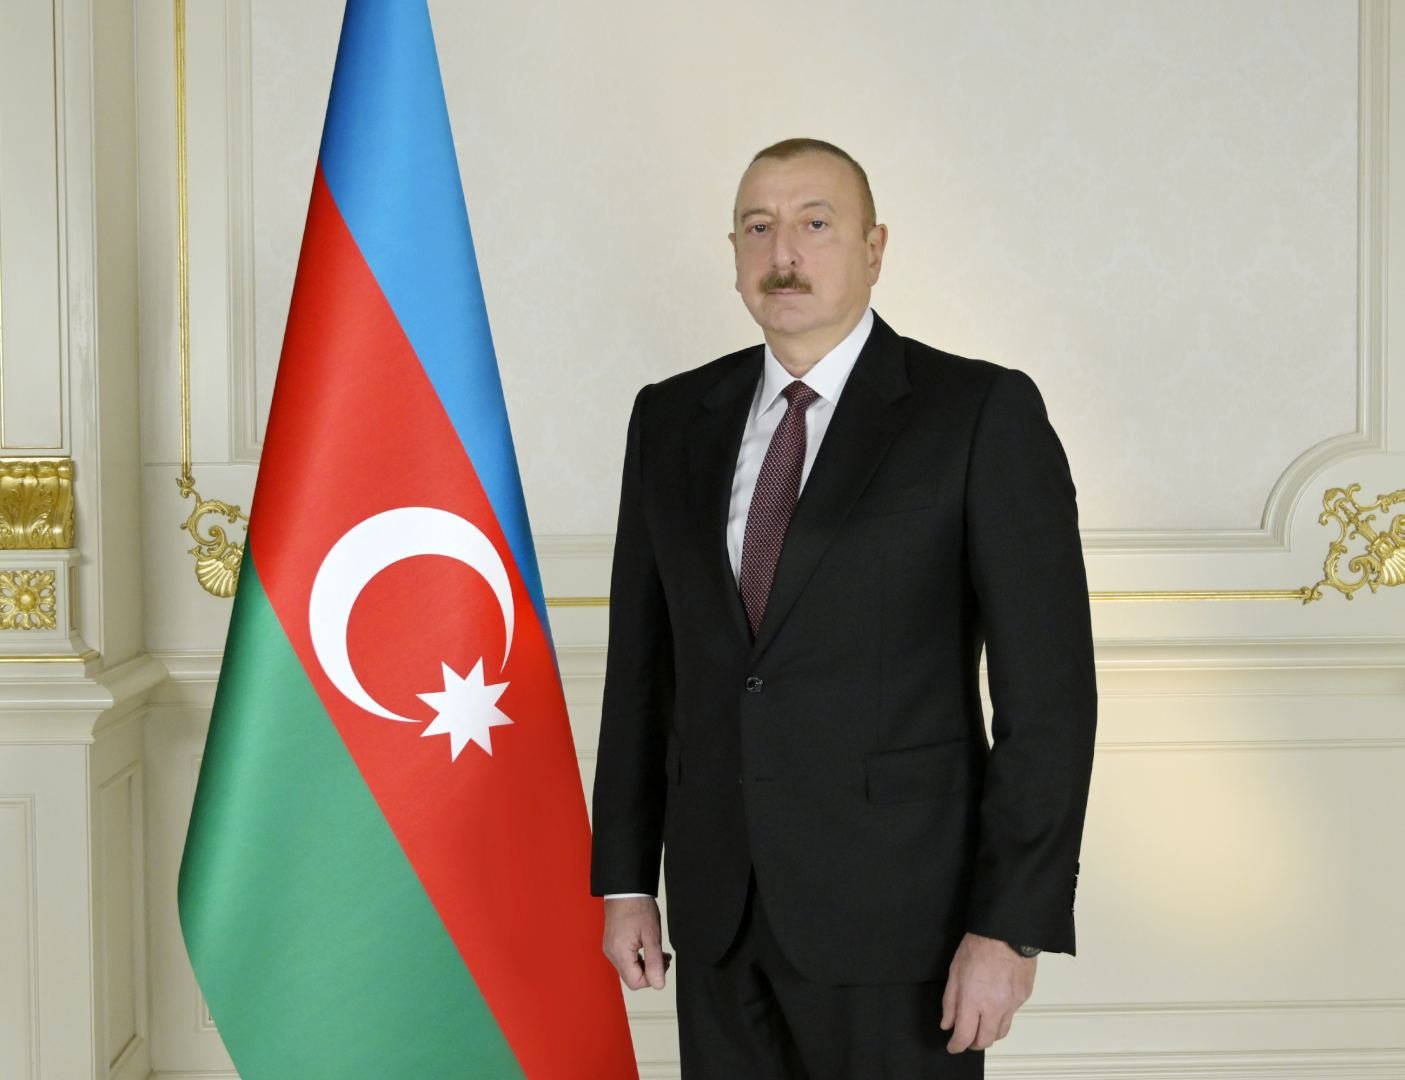 President Ilham Aliyev expresses condolences to President Recep Tayyip Erdogan